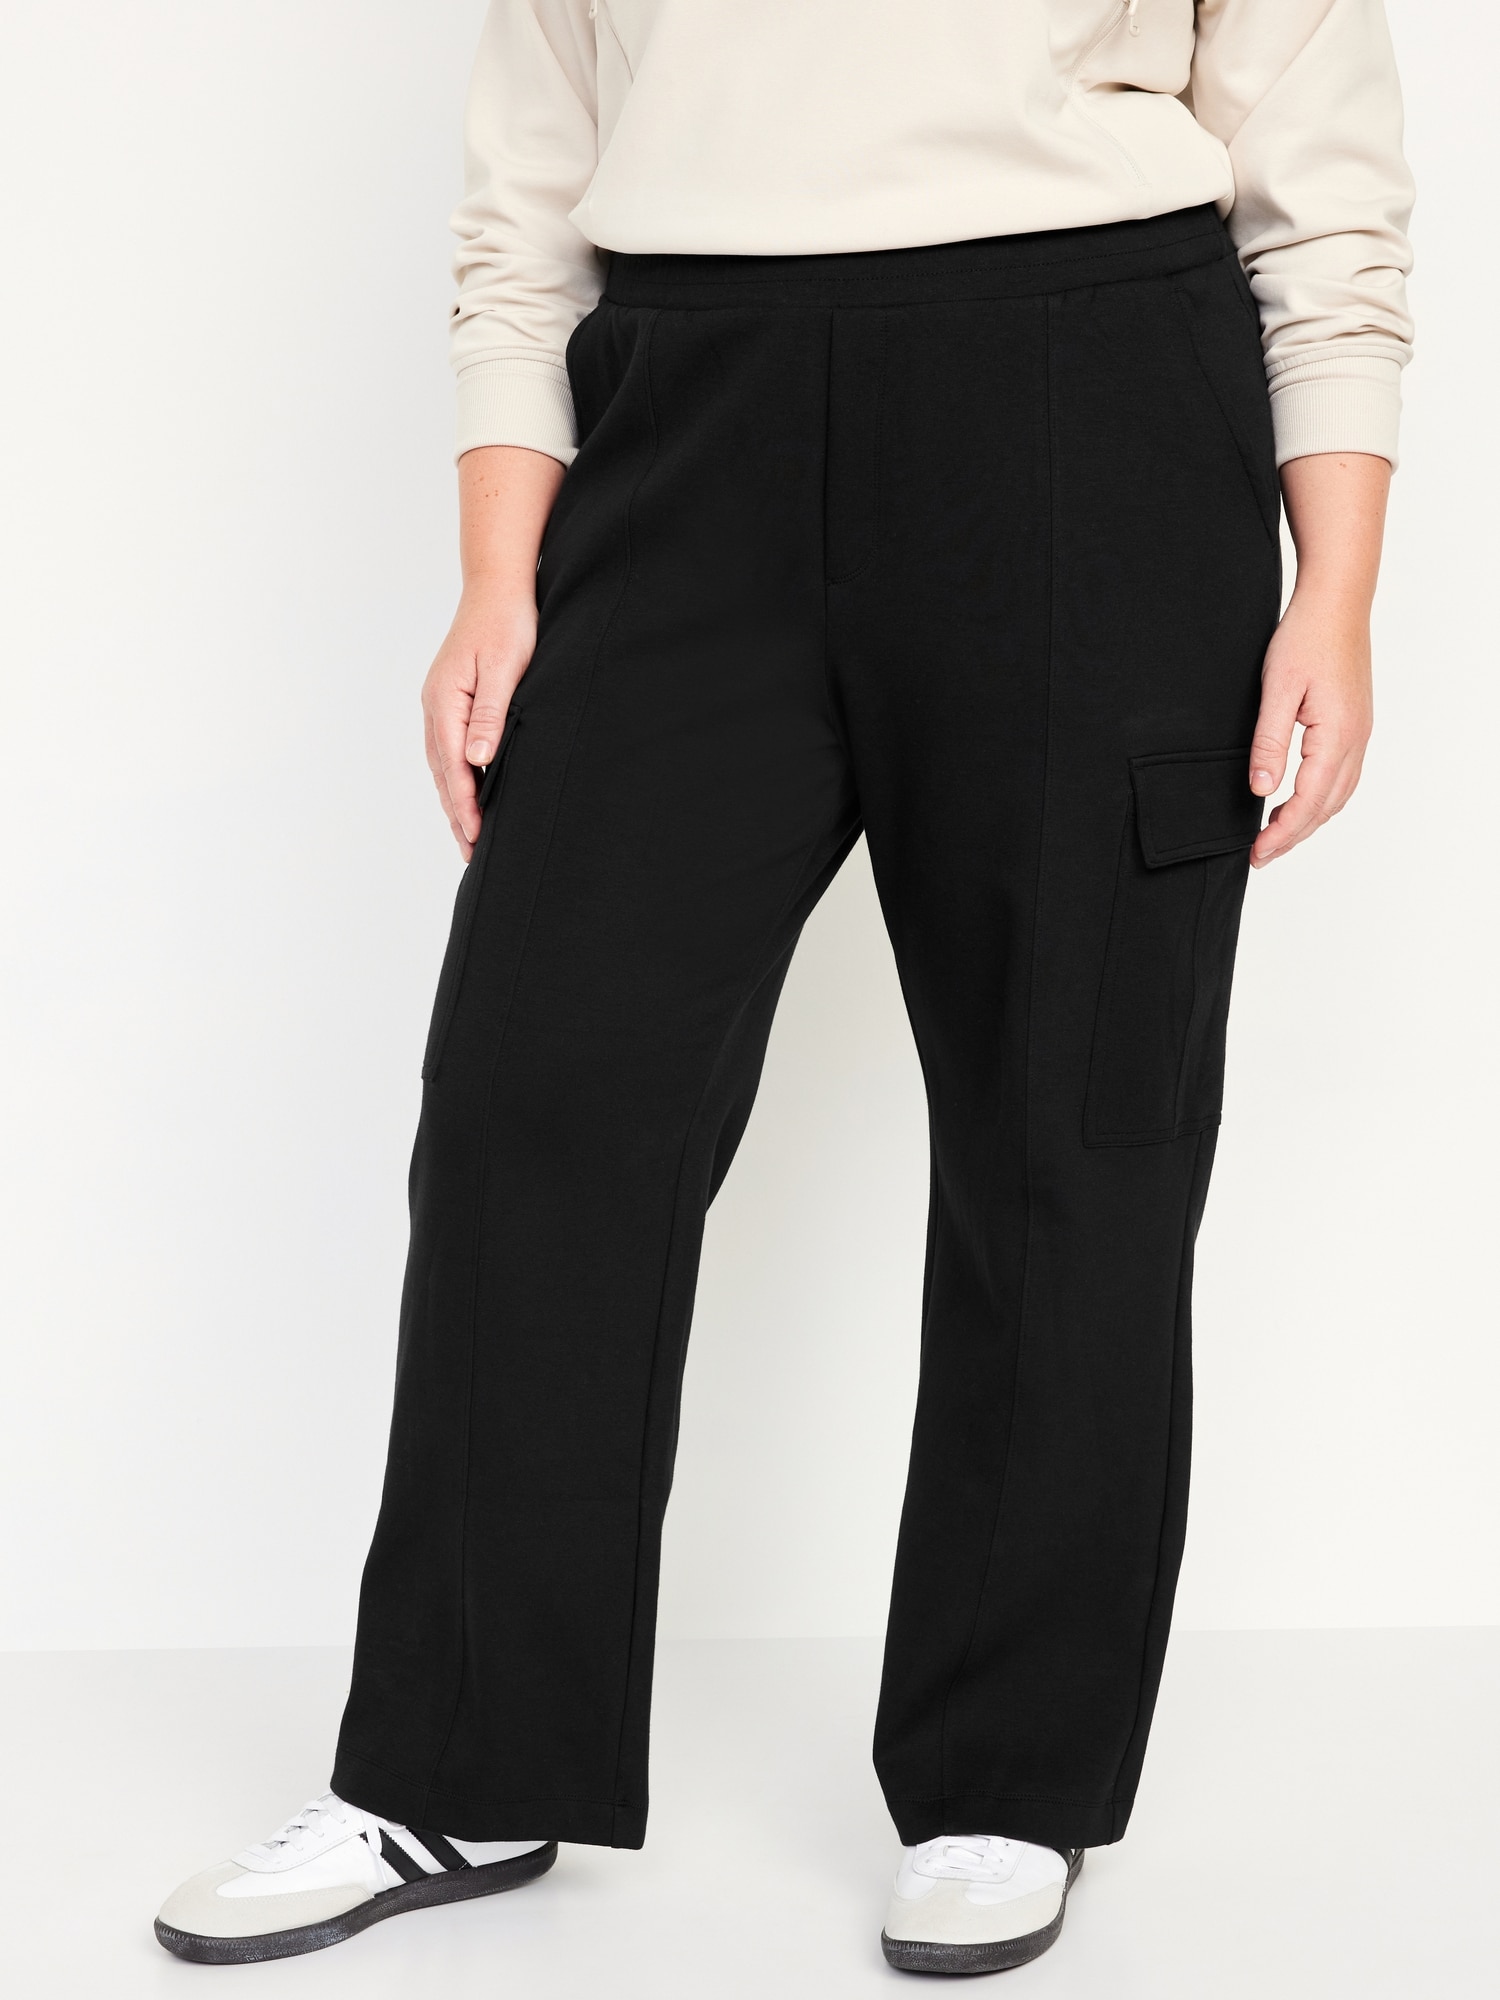 Buy Designer Shararas, Palazzo Pants and Trouser Pants for Women-saigonsouth.com.vn